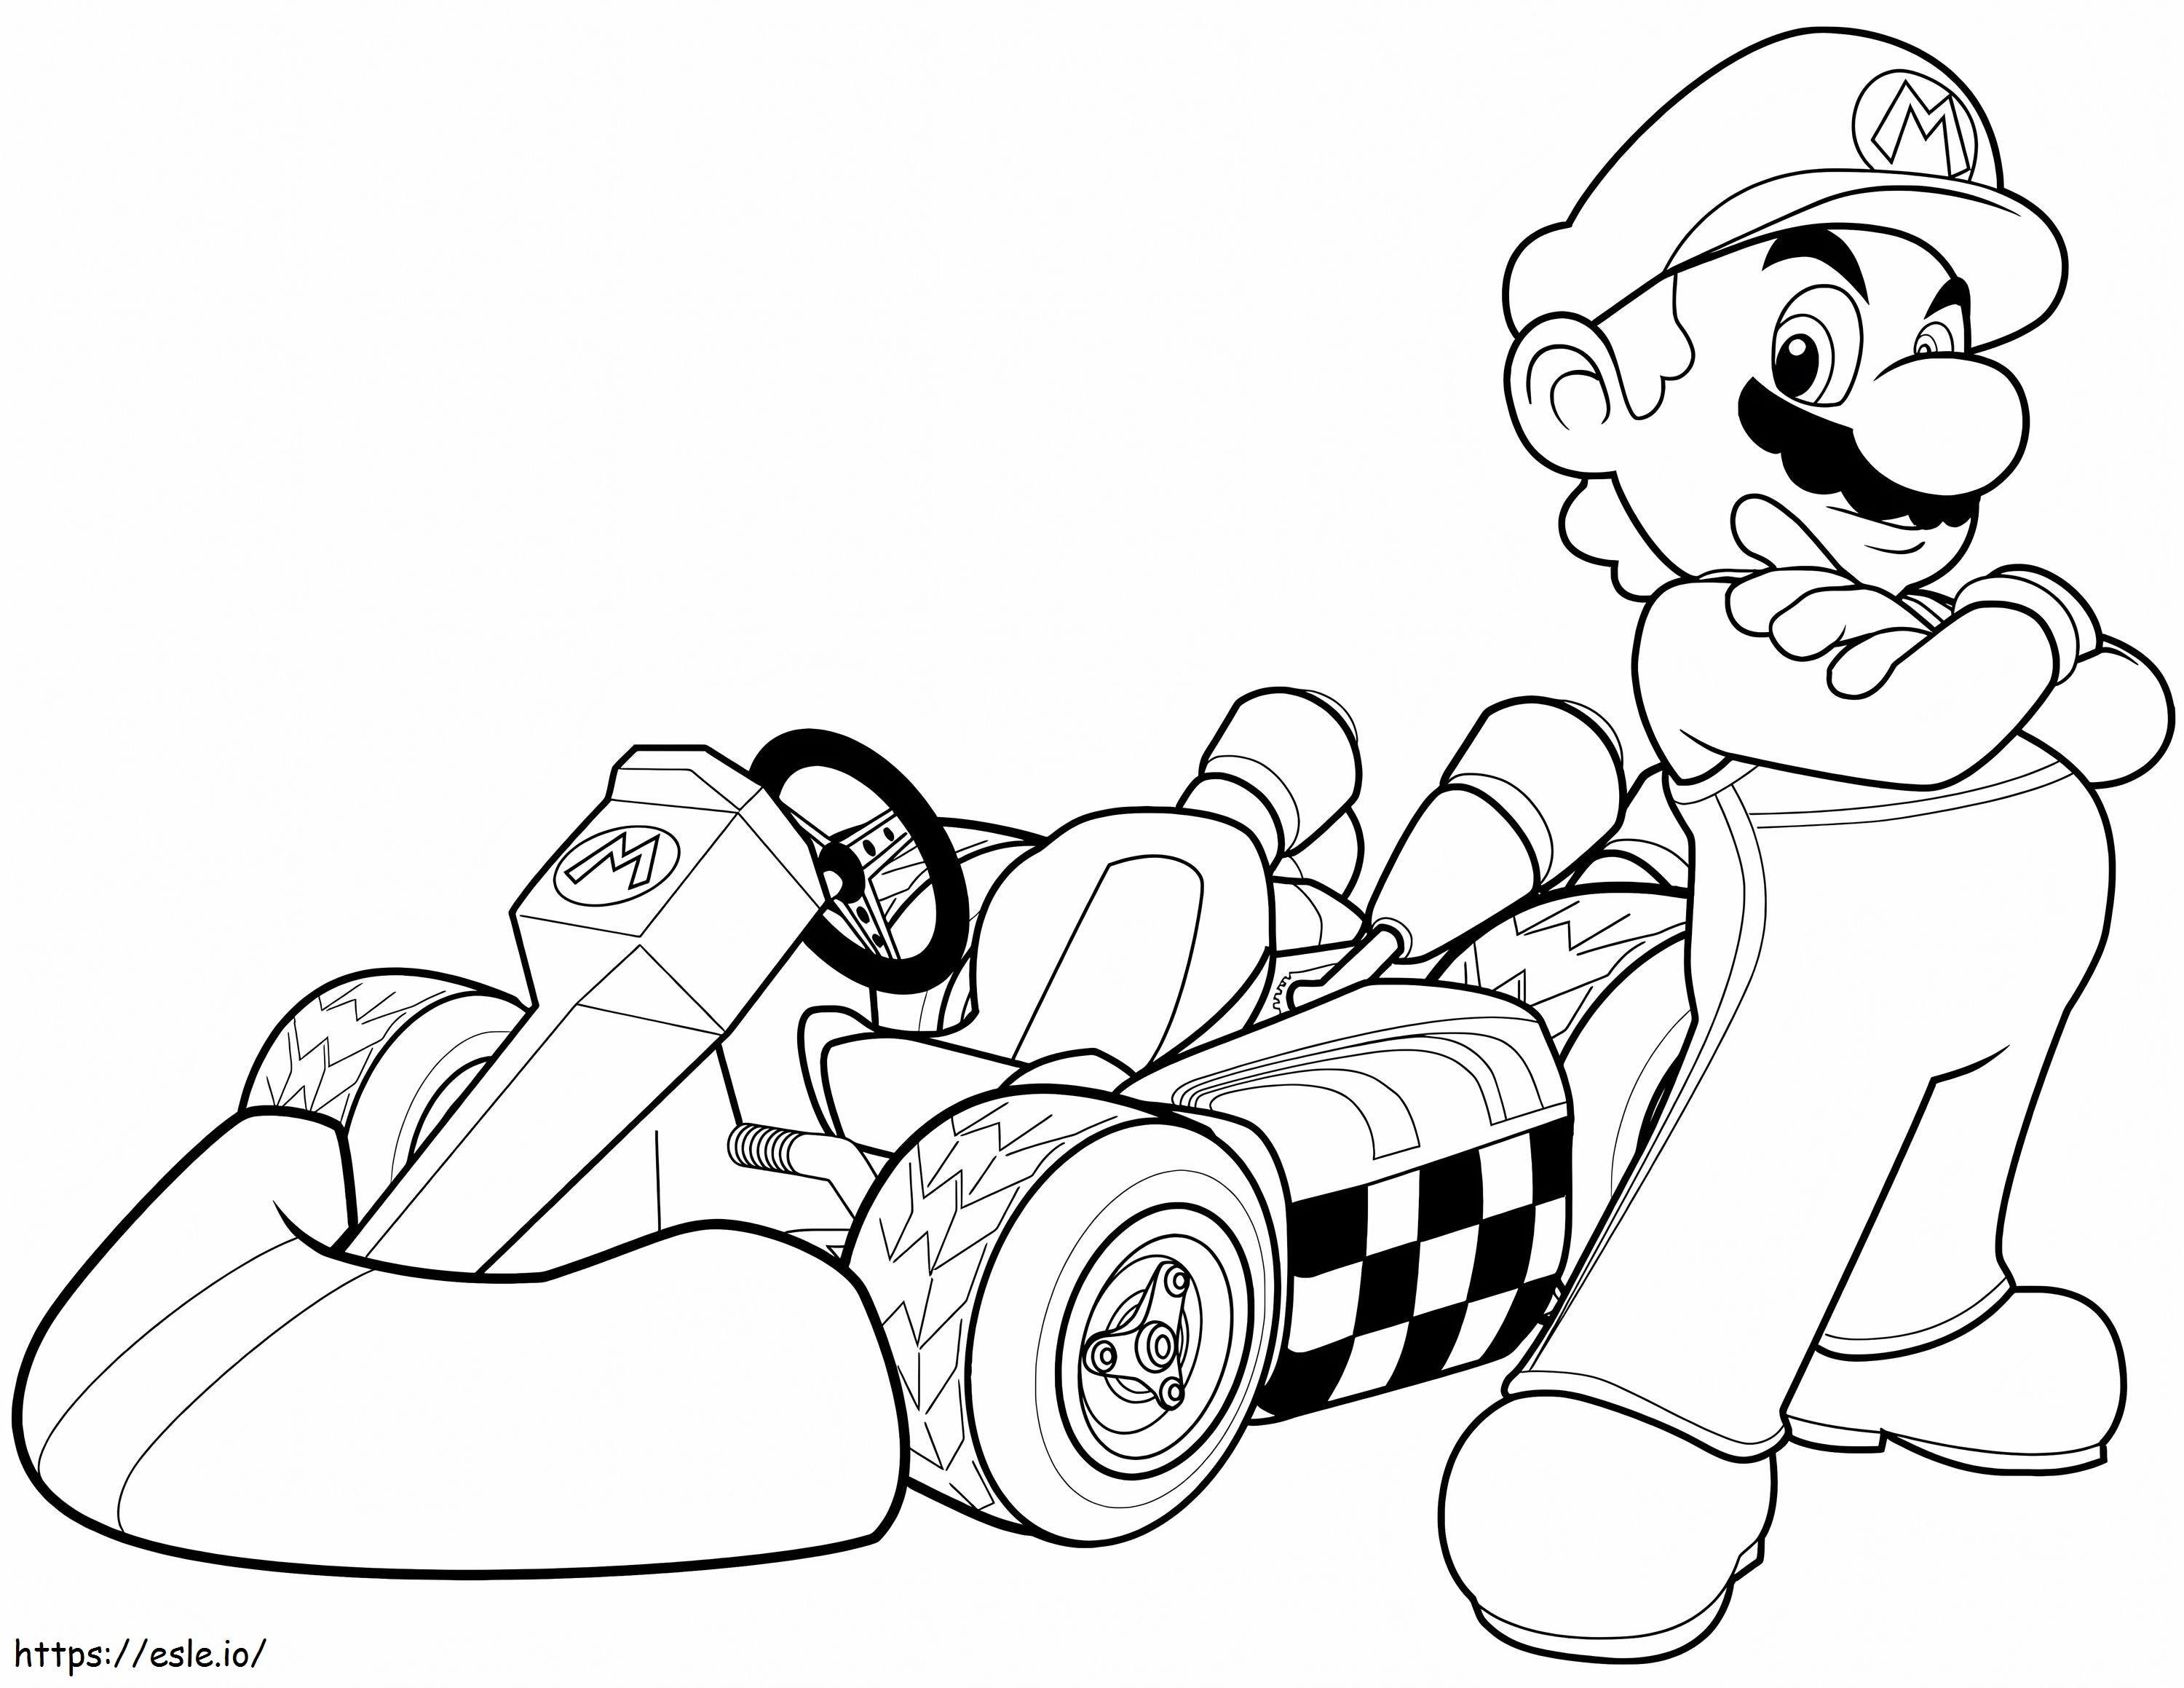 Mario Mario Kart na Wii kolorowanka